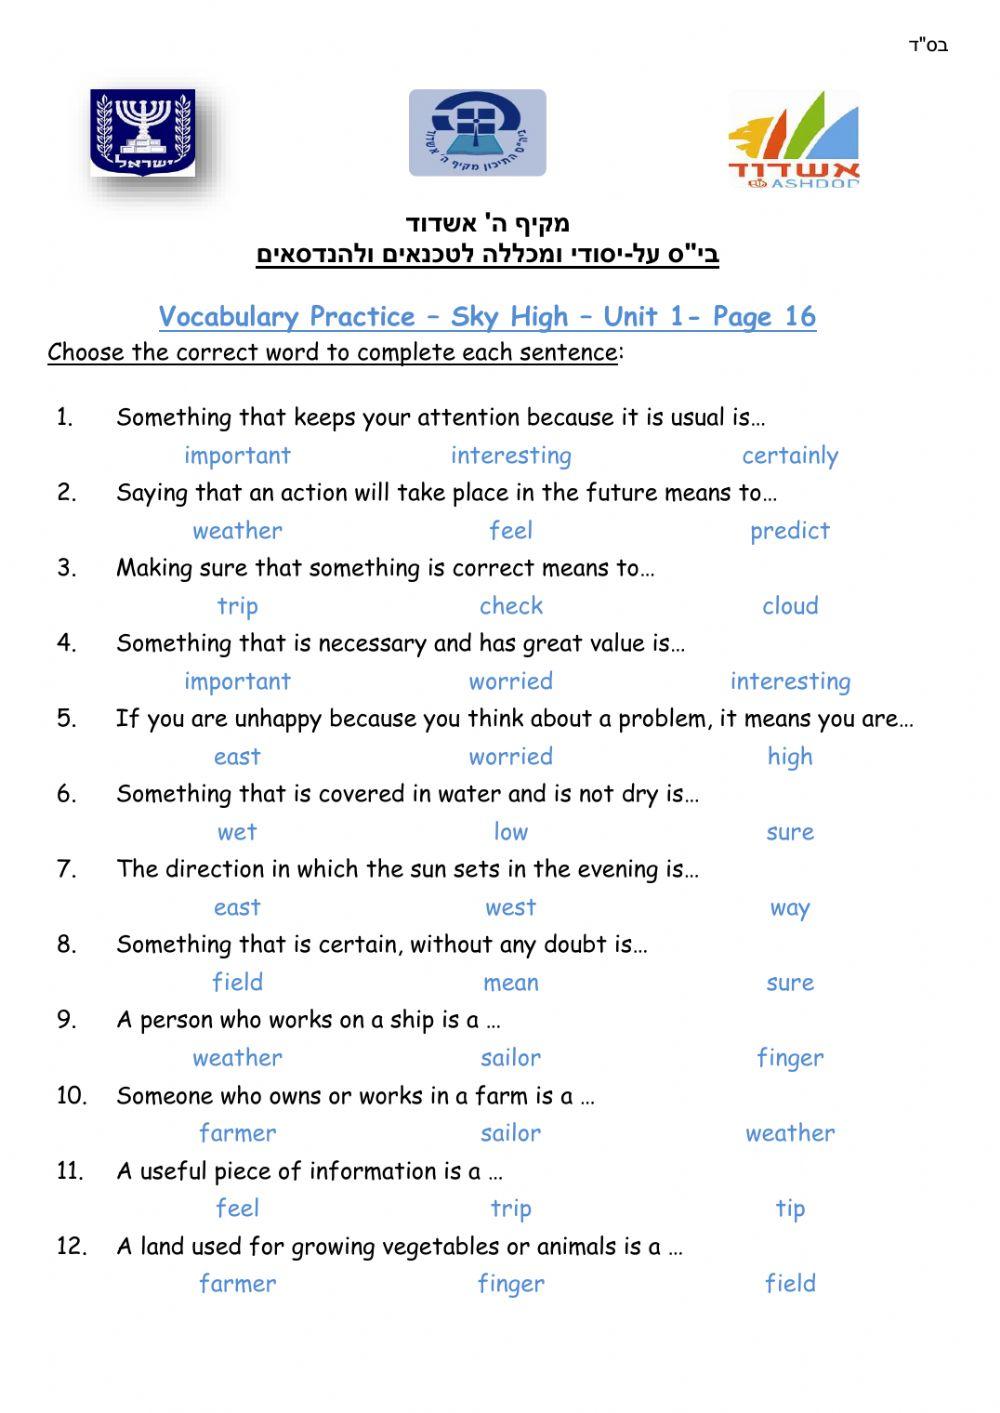 Vocabulary Practice - Sky High - Unit 1 - p.16